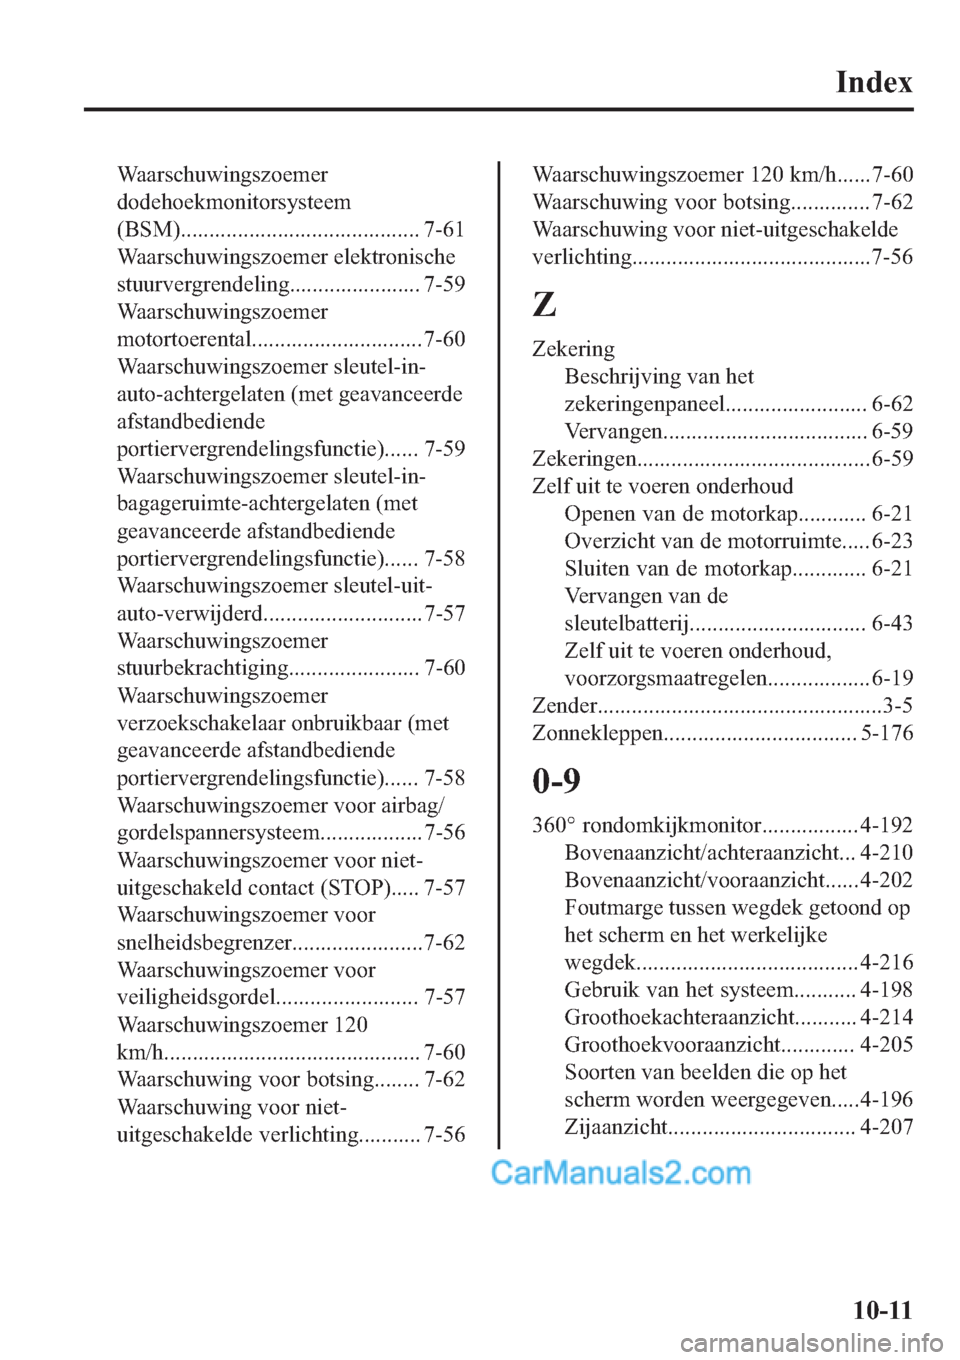 MAZDA MODEL 2 2019  Handleiding (in Dutch) �,�Q�G�H�[
�:�D�D�U�V�F�K�X�Z�L�Q�J�V�]�R�H�P�H�U
�G�R�G�H�K�R�H�N�P�R�Q�L�W�R�U�V�\�V�W�H�H�P
��%�6�0������������������������������������������� ����
�